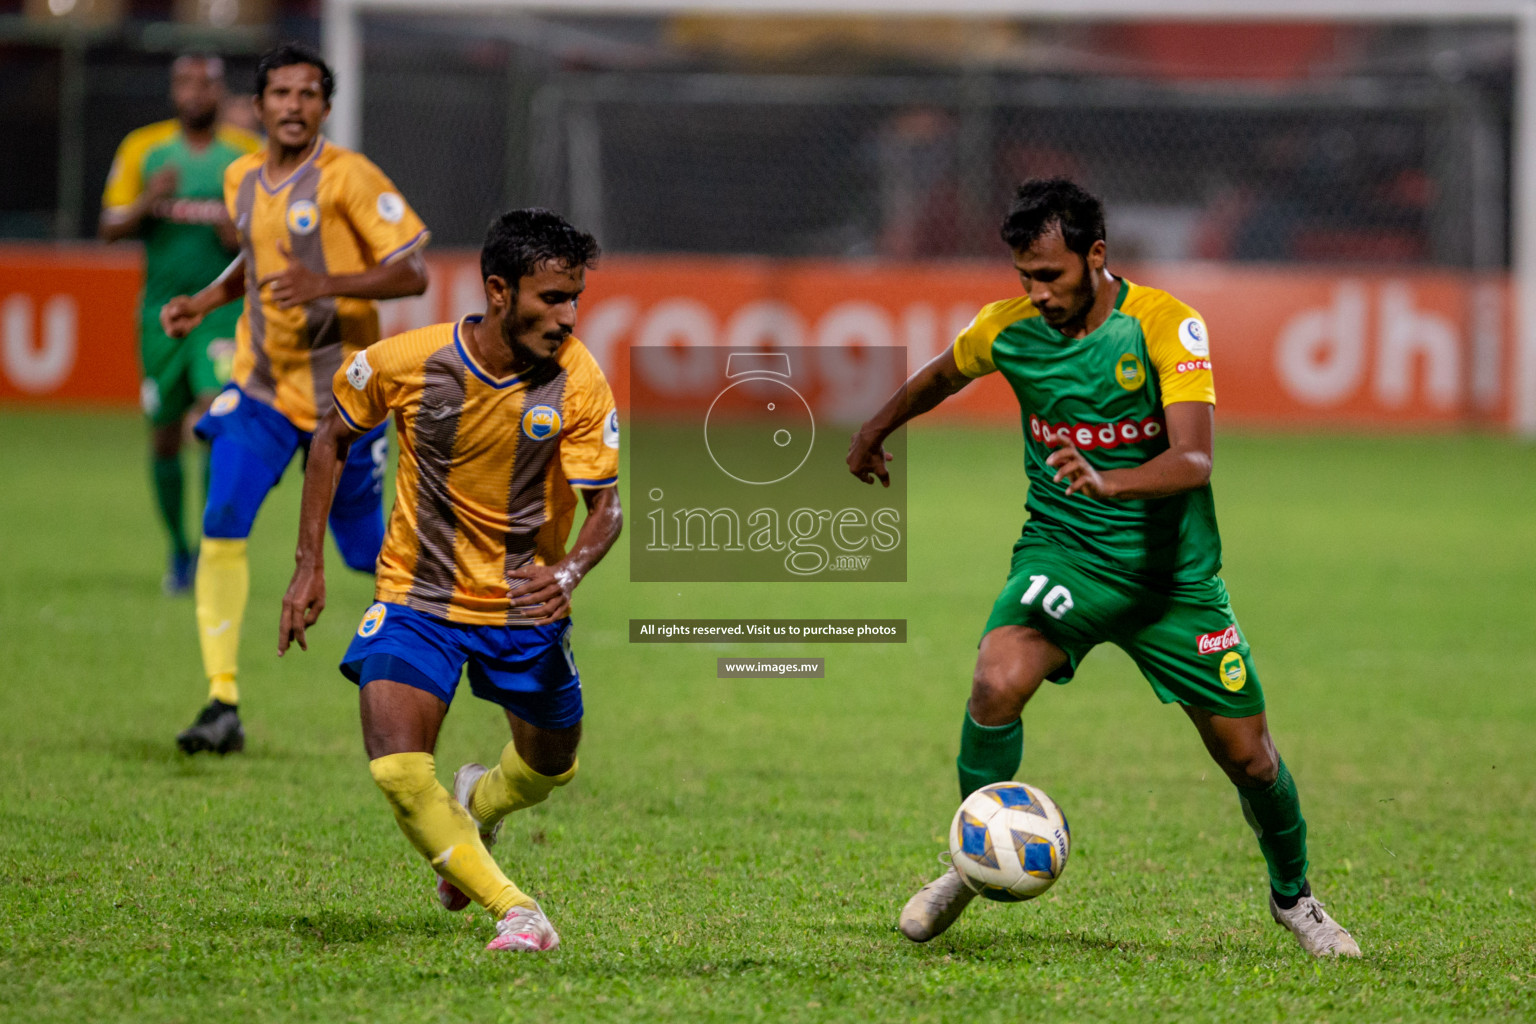 Club Valencia vs Maziya SRC in Dhiraagu Dhivehi Premier League 2020-21 on 26 December 2020 held in Male', Maldives